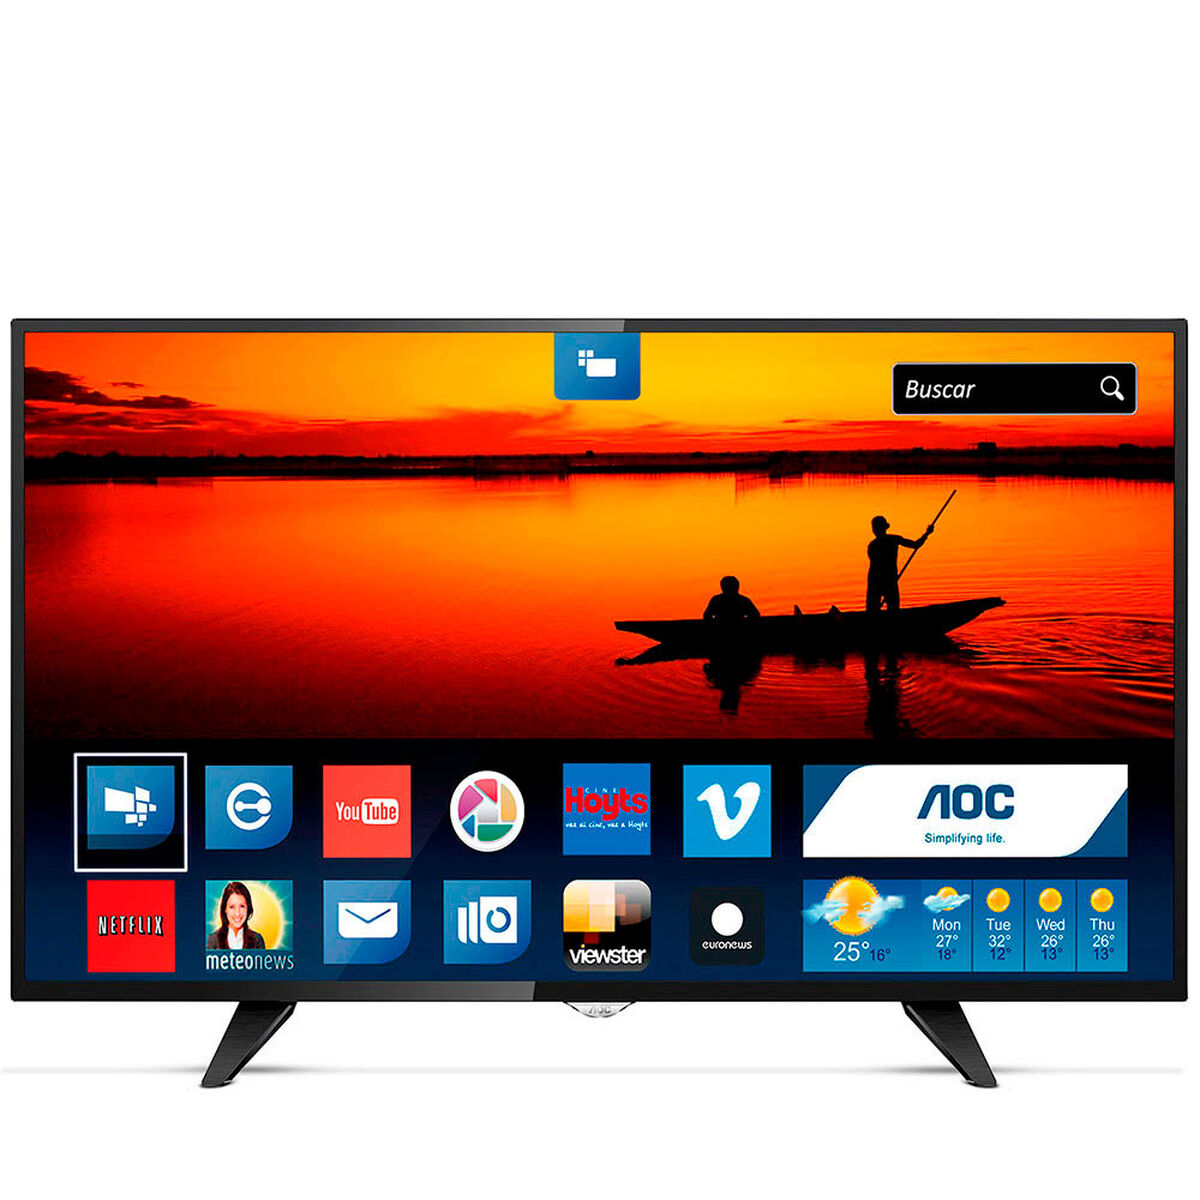 LED AOC Smart TV 43" Full HD LE43S5970